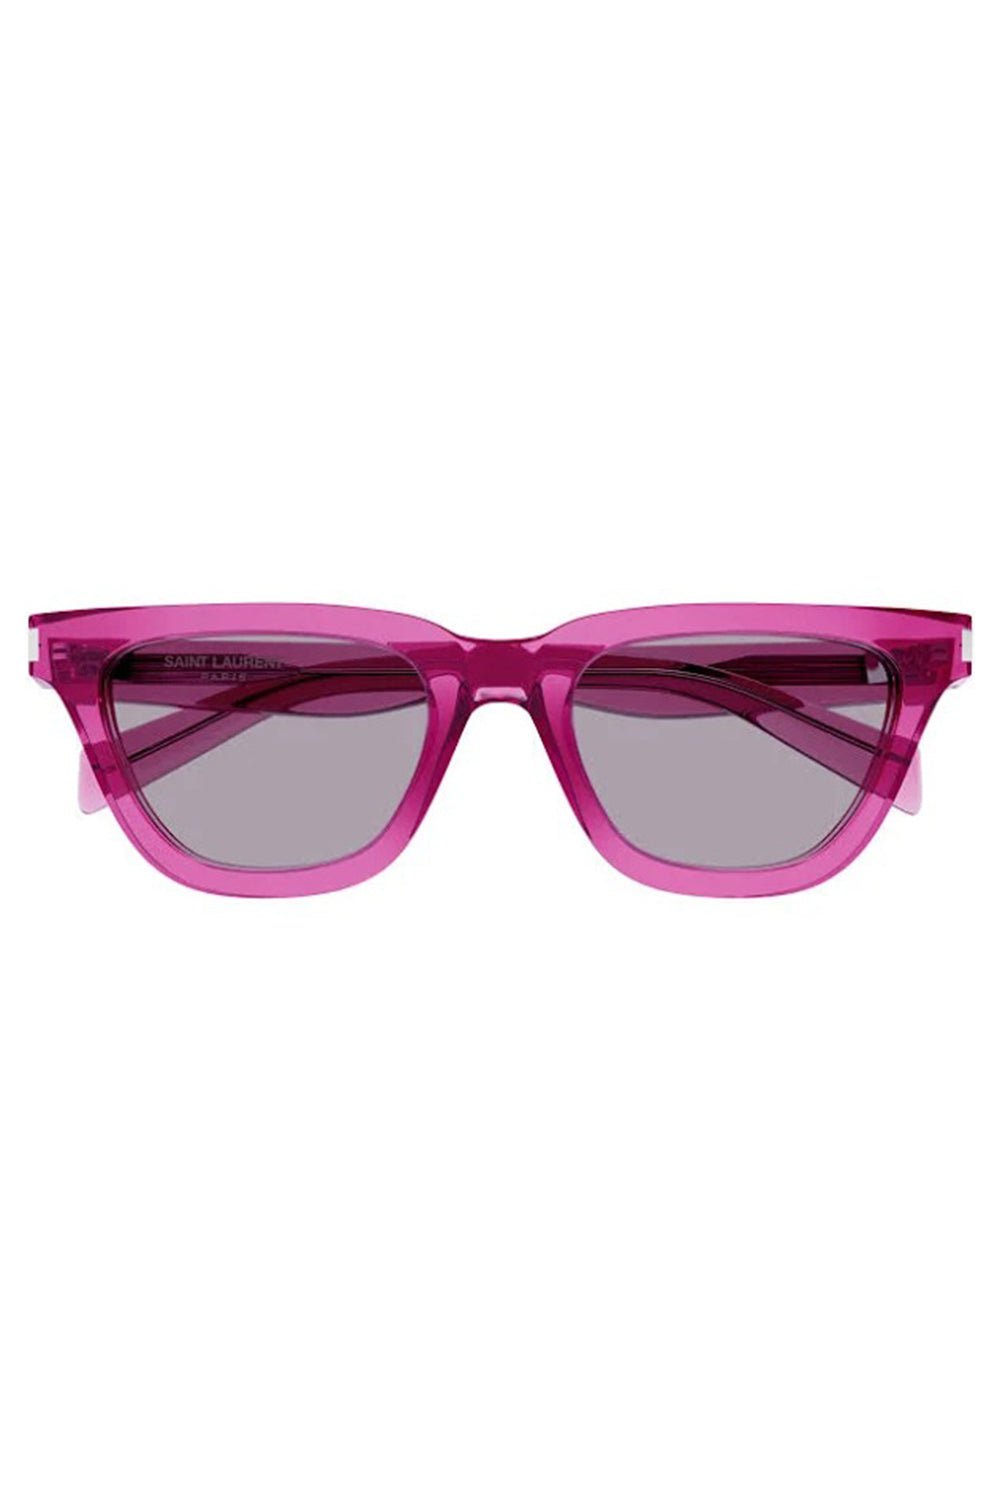 SAINT LAURENT-Sulplice Sunglasses - Pink Violet-PNK/VIO